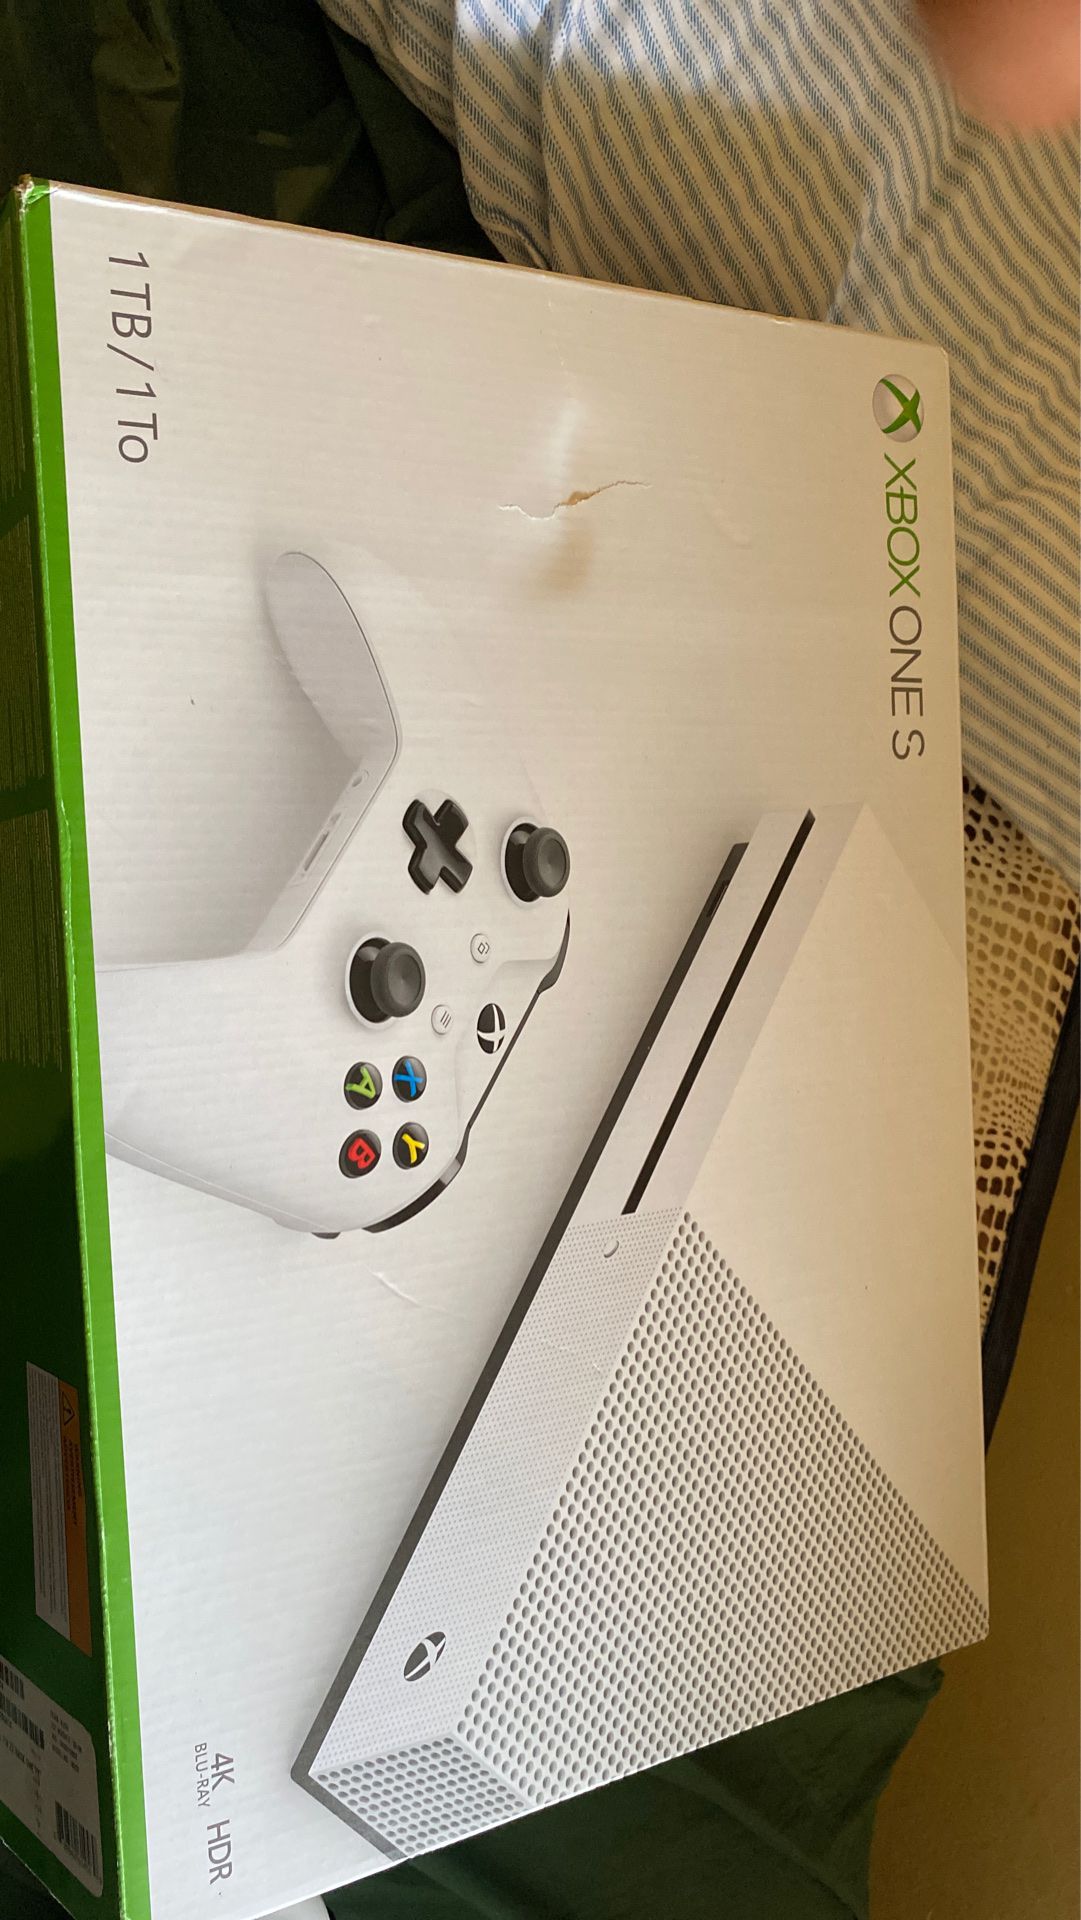 Brand new Xbox one s